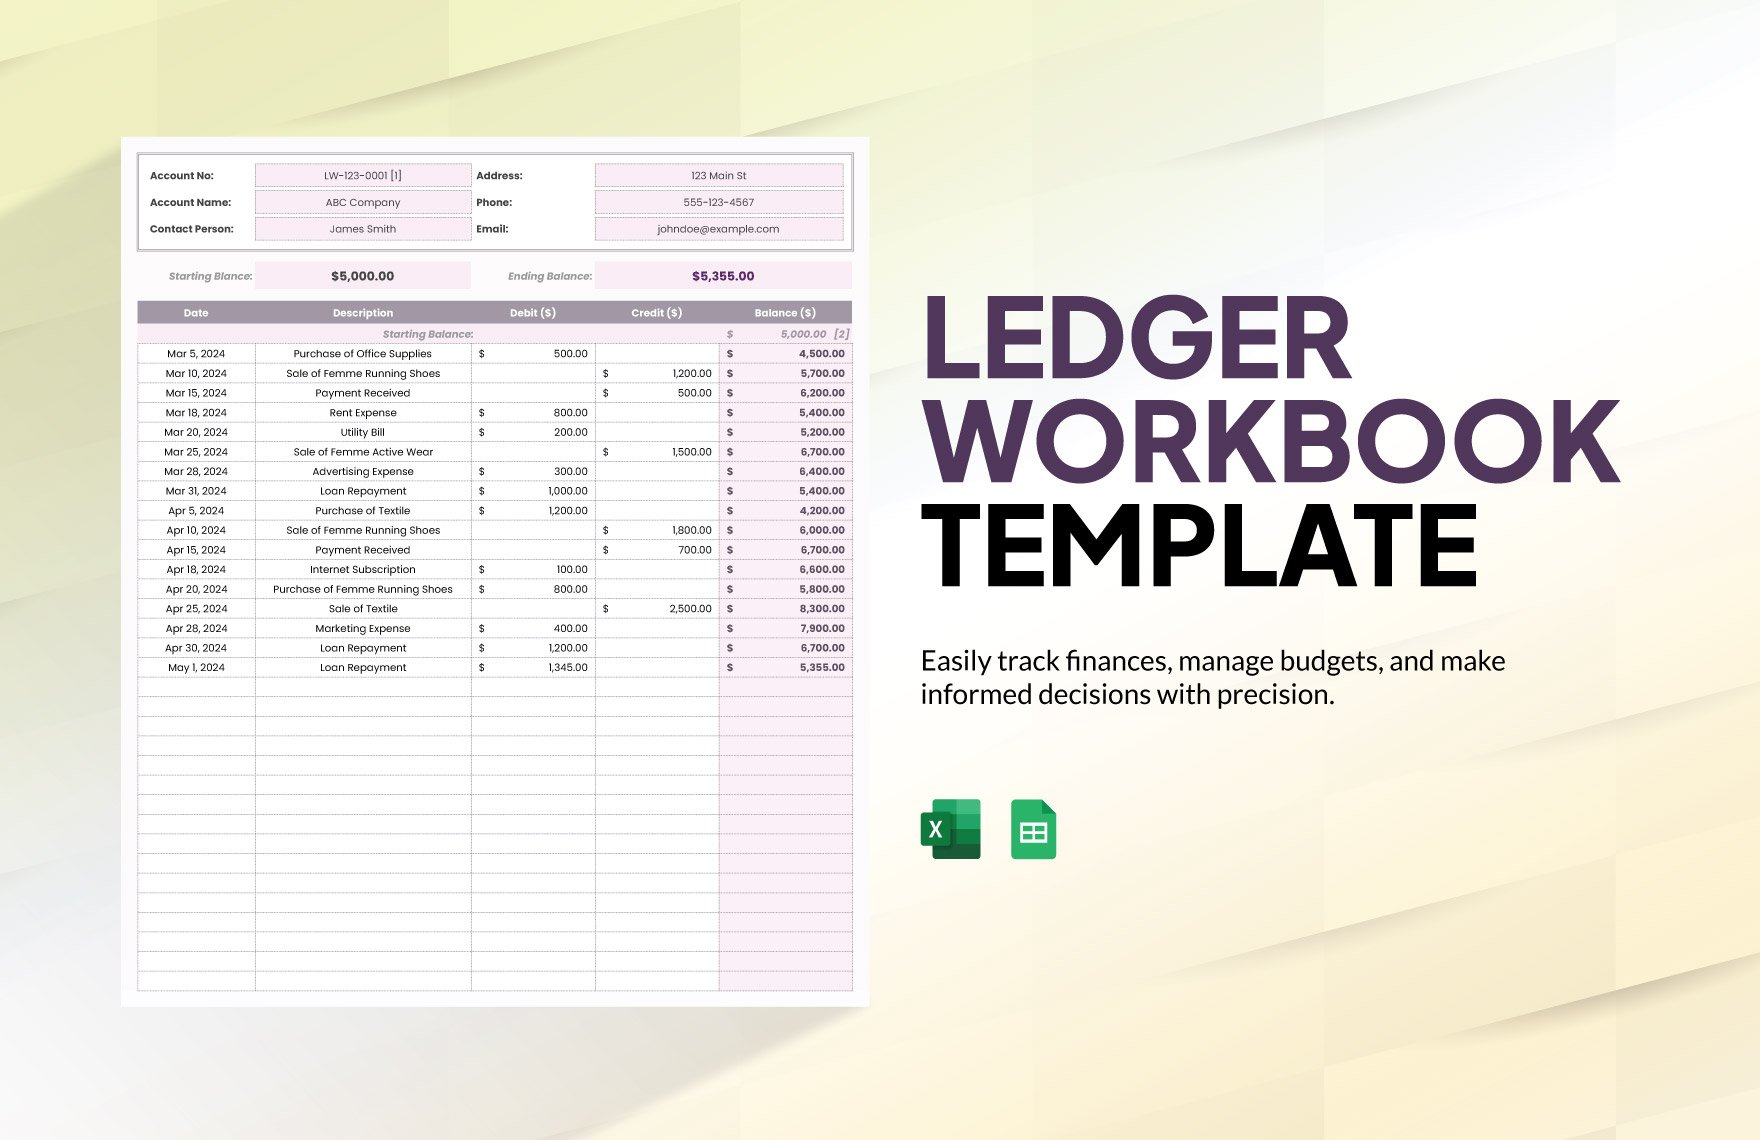 Ledger Workbook Template in Excel, Google Sheets